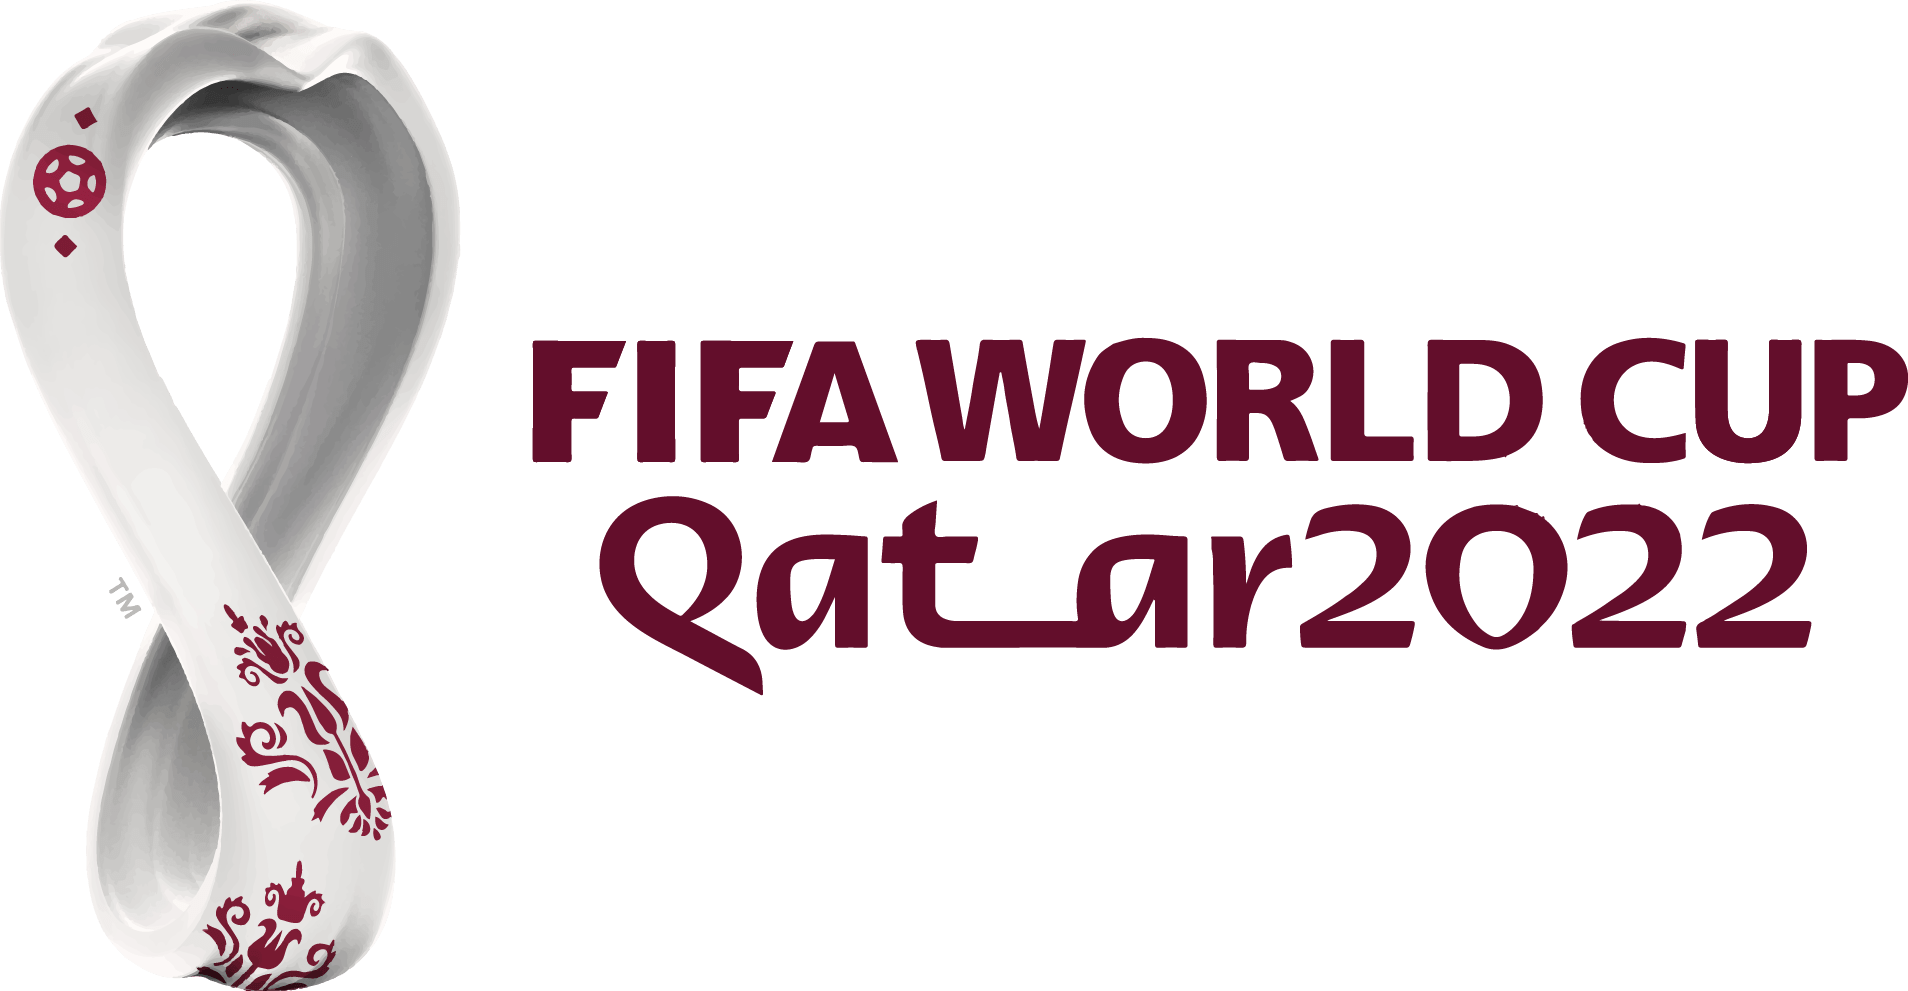 Plataforma Parche Rebaño Mundial Qatar 2022 Logo Probable Bombilla Aguja